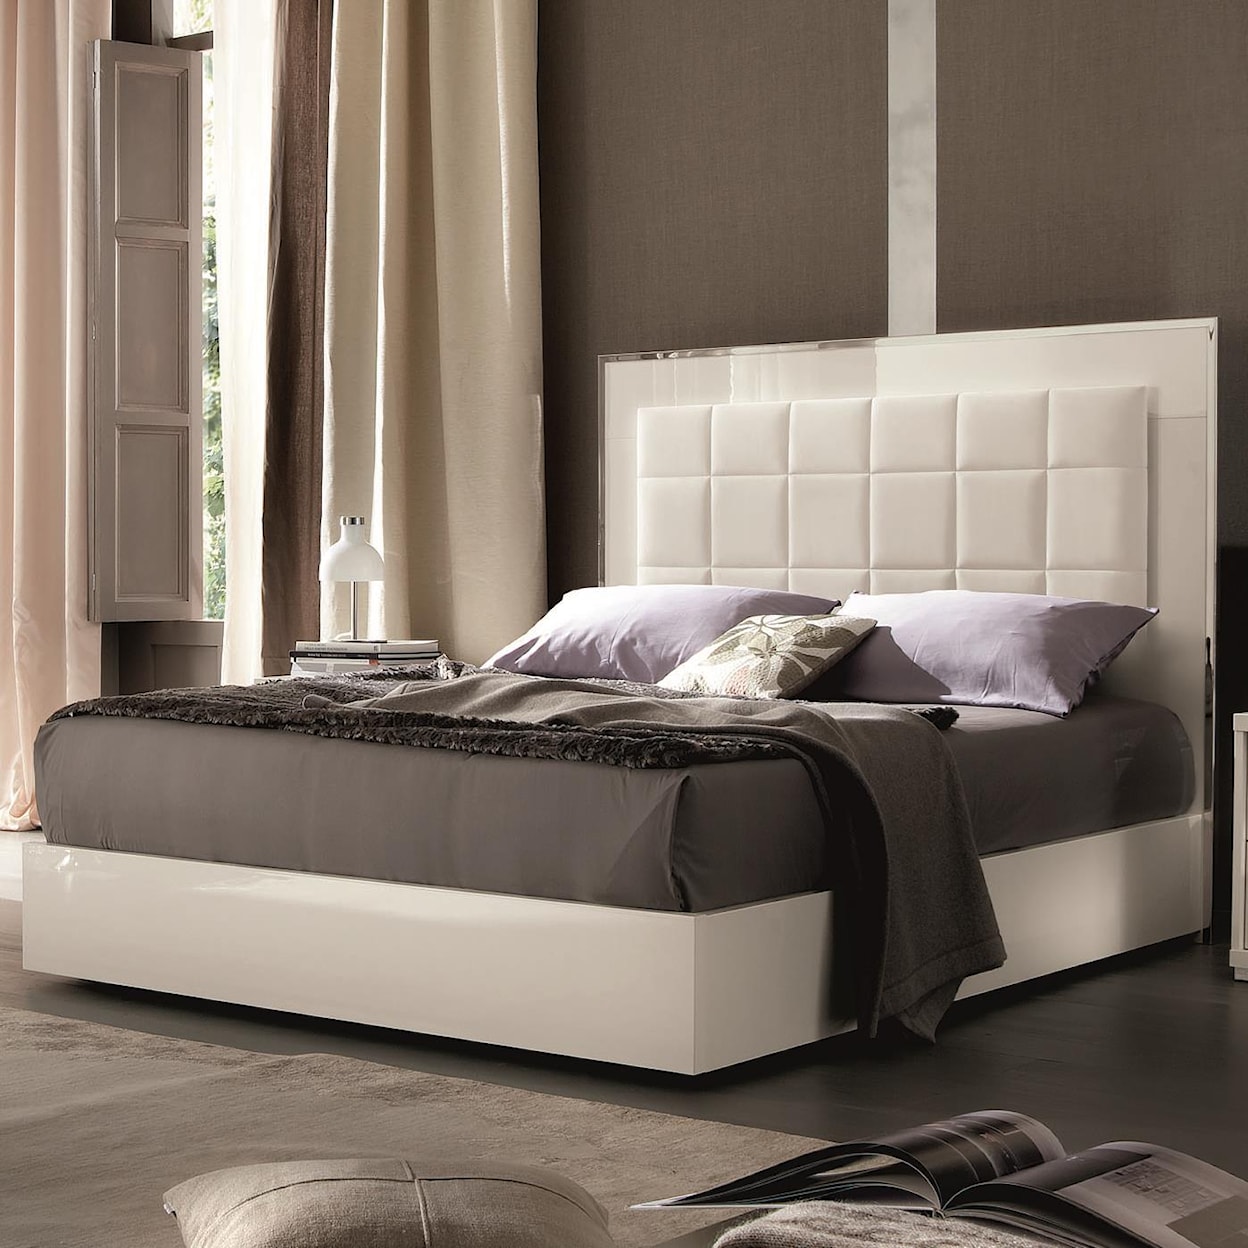 Alf Italia Imperia California King Upholstered Bed